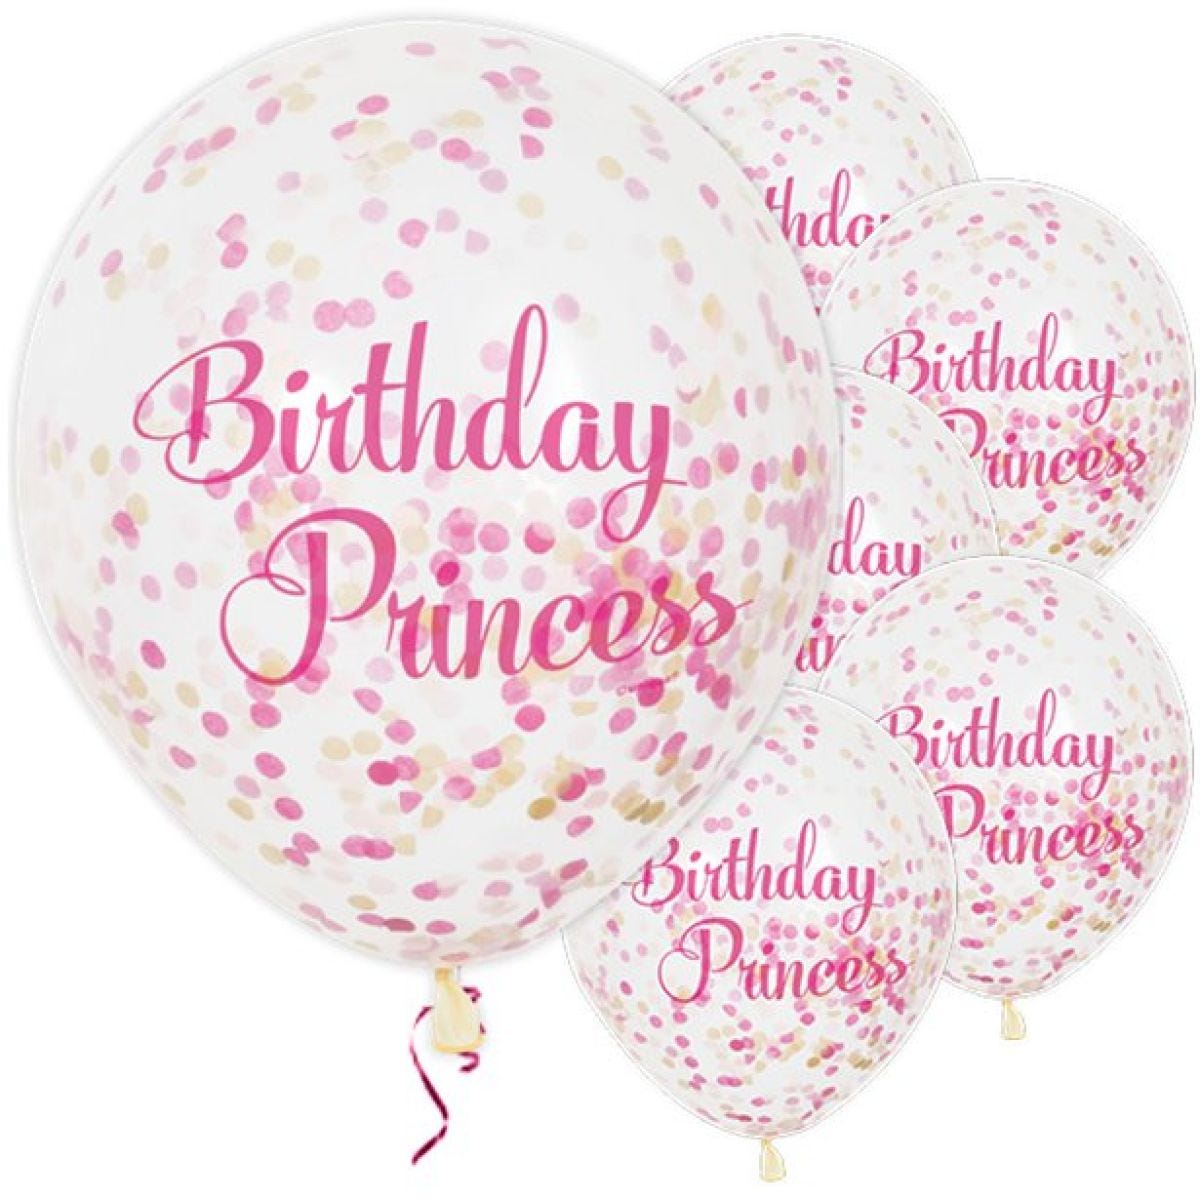 Birthday Princess Confetti Balloons - 12" Latex (6pk)